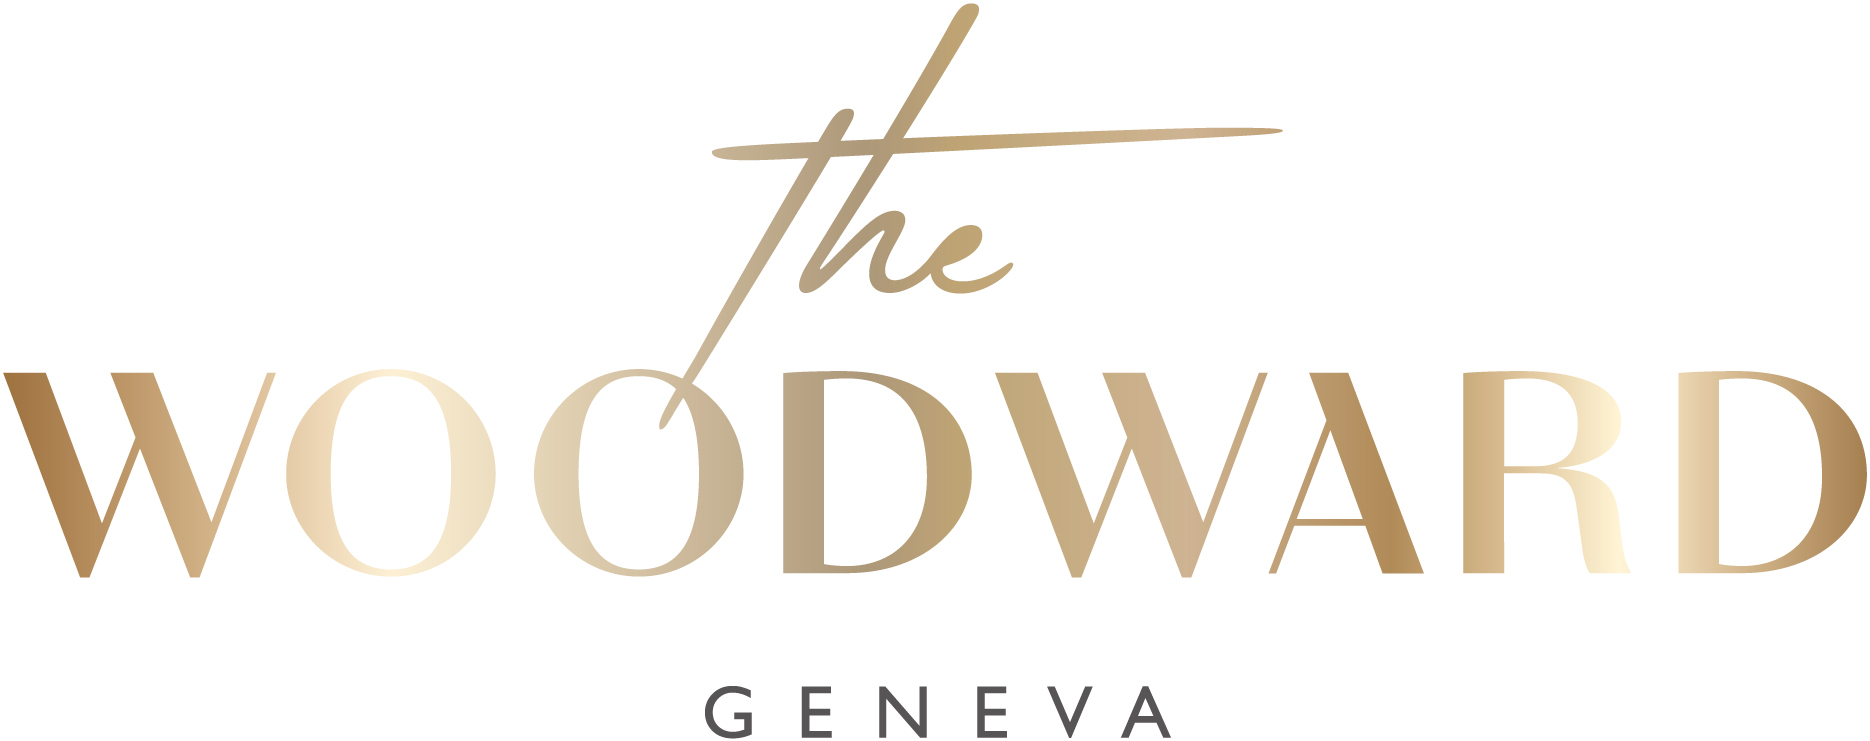 The Woodward Geneve